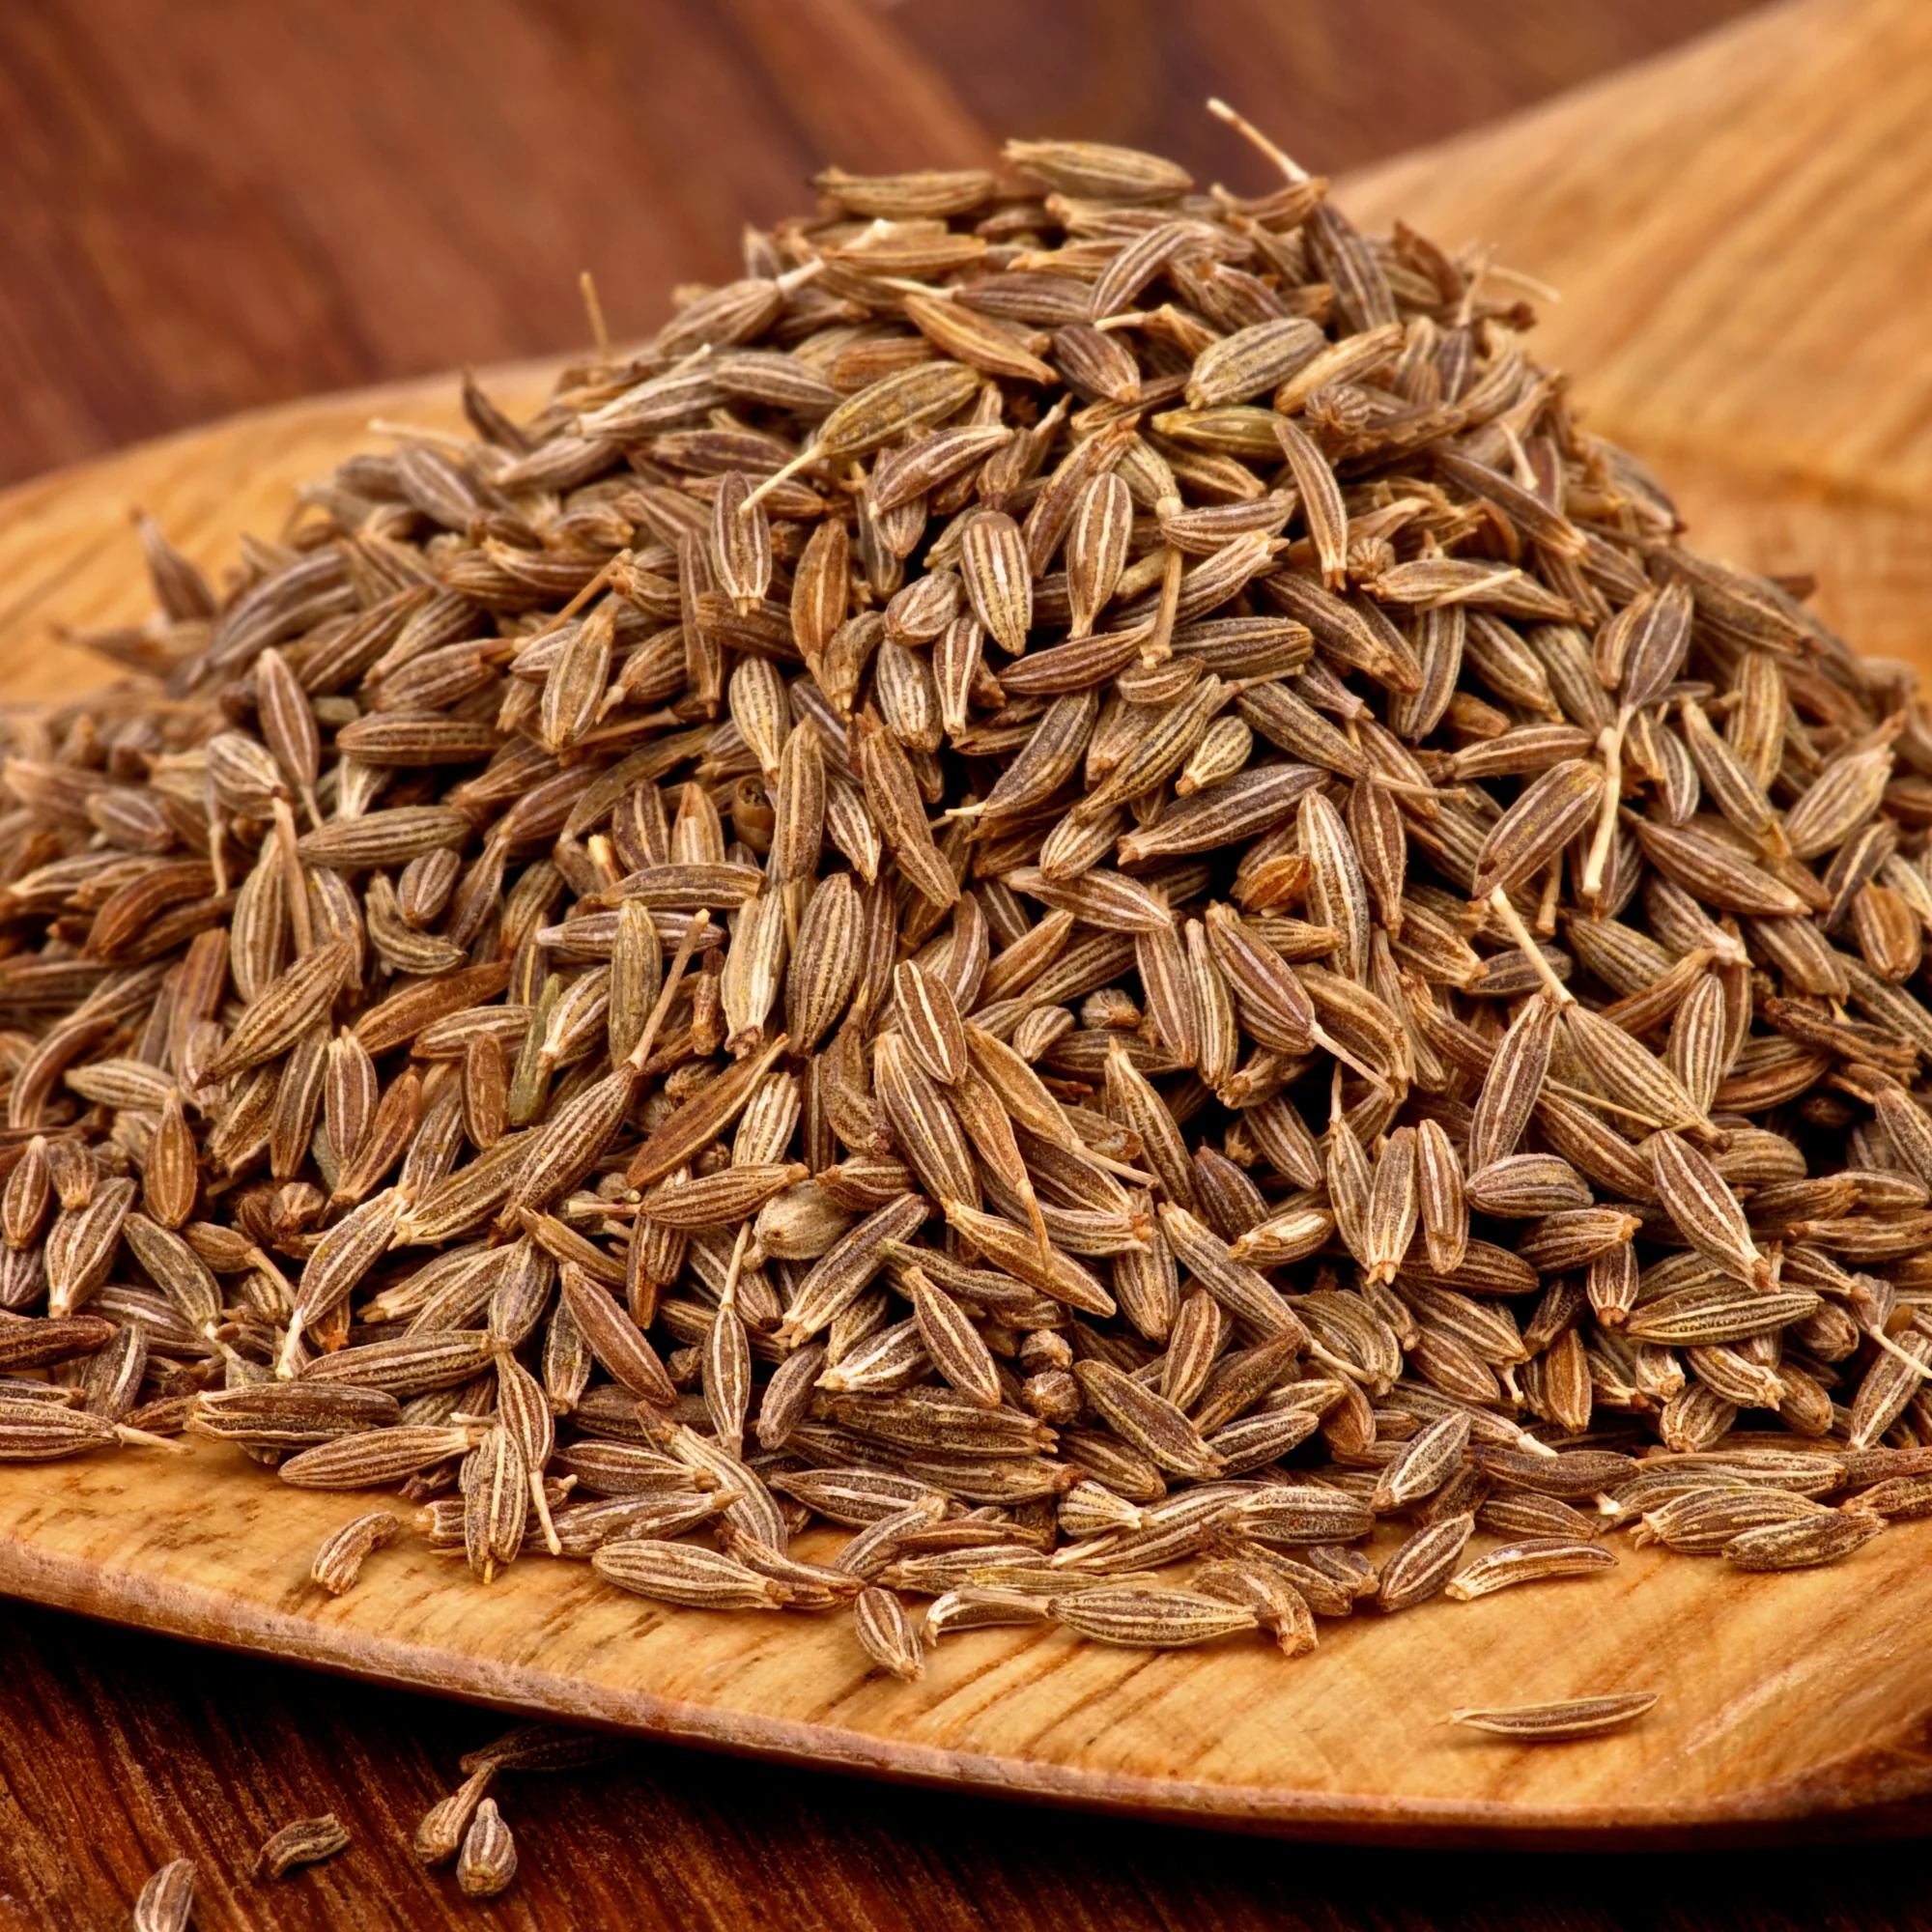 Benefits of Fennel seeds